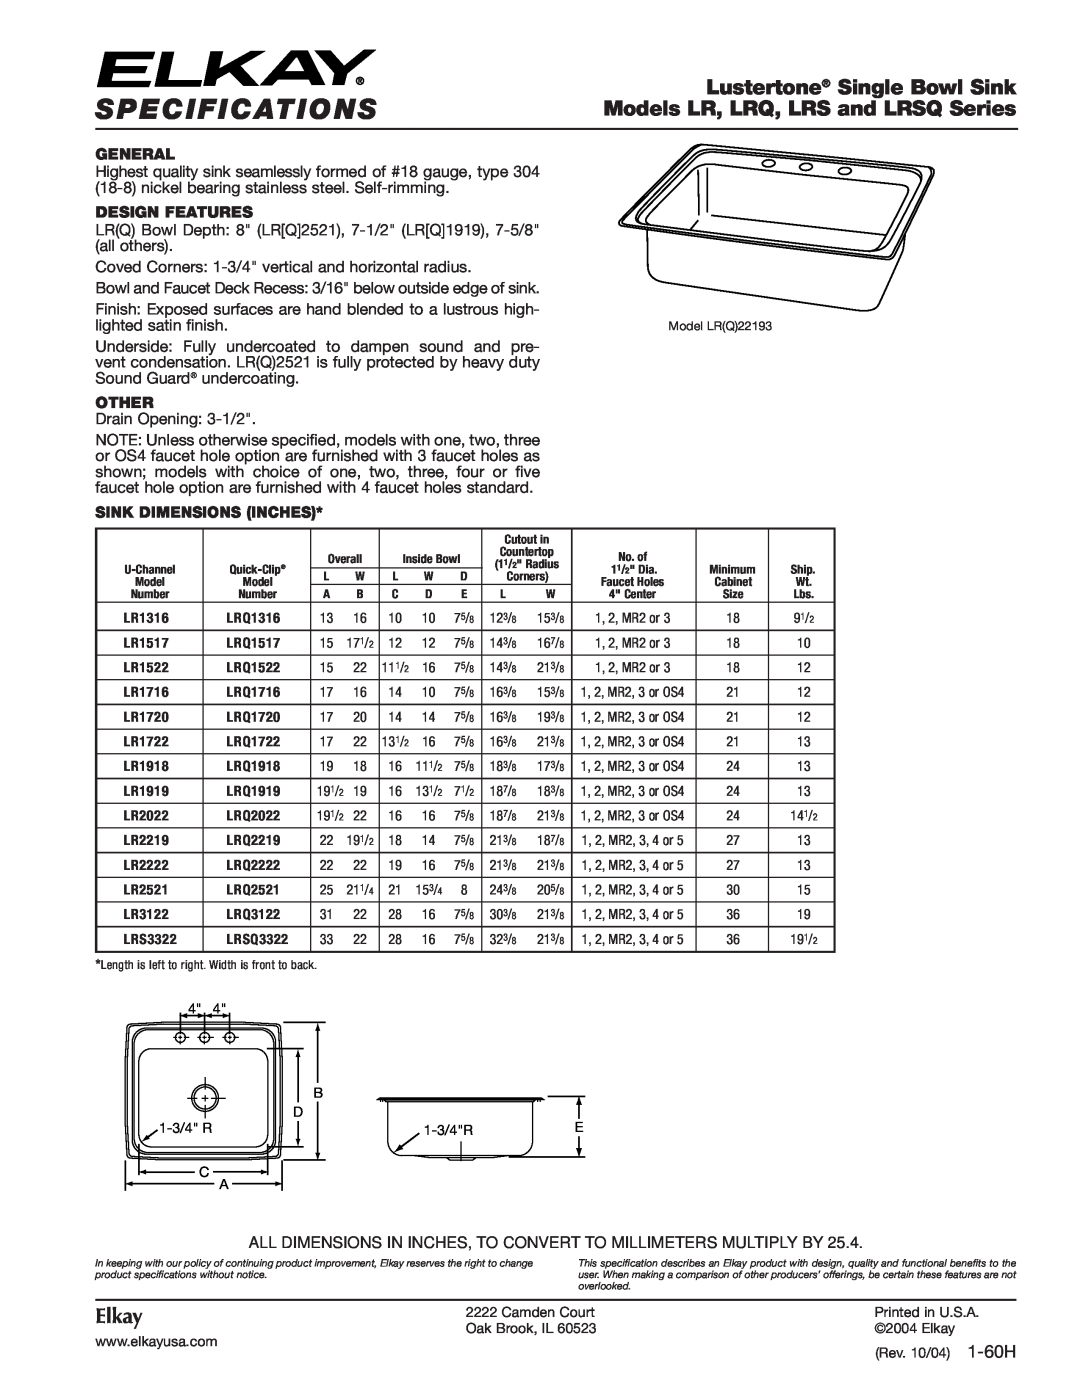 Elkay LRQ2022 specifications Specifications, Lustertone Single Bowl Sink, Models LR, LRQ, LRS and LRSQ Series, Elkay 